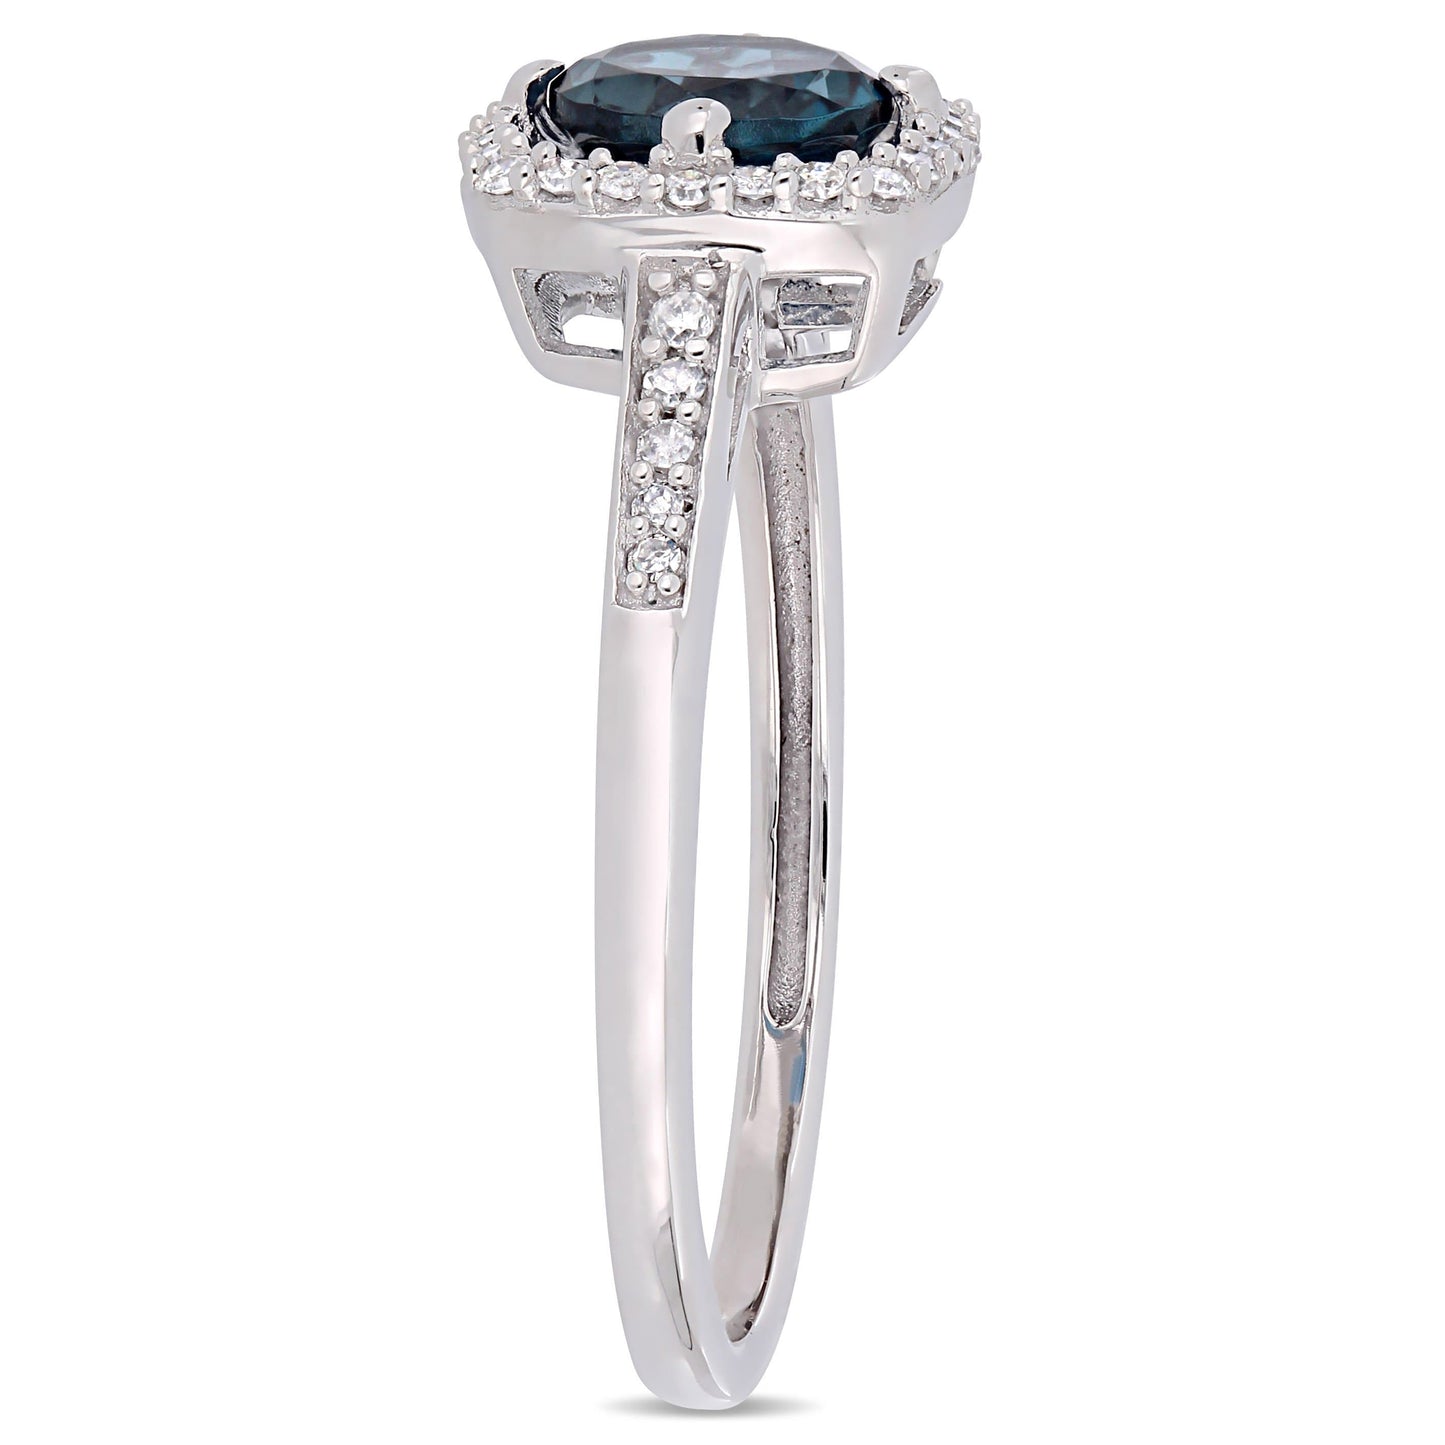 Julie Leah London Blue Topaz & Diamond Halo Ring in 10k White Gold